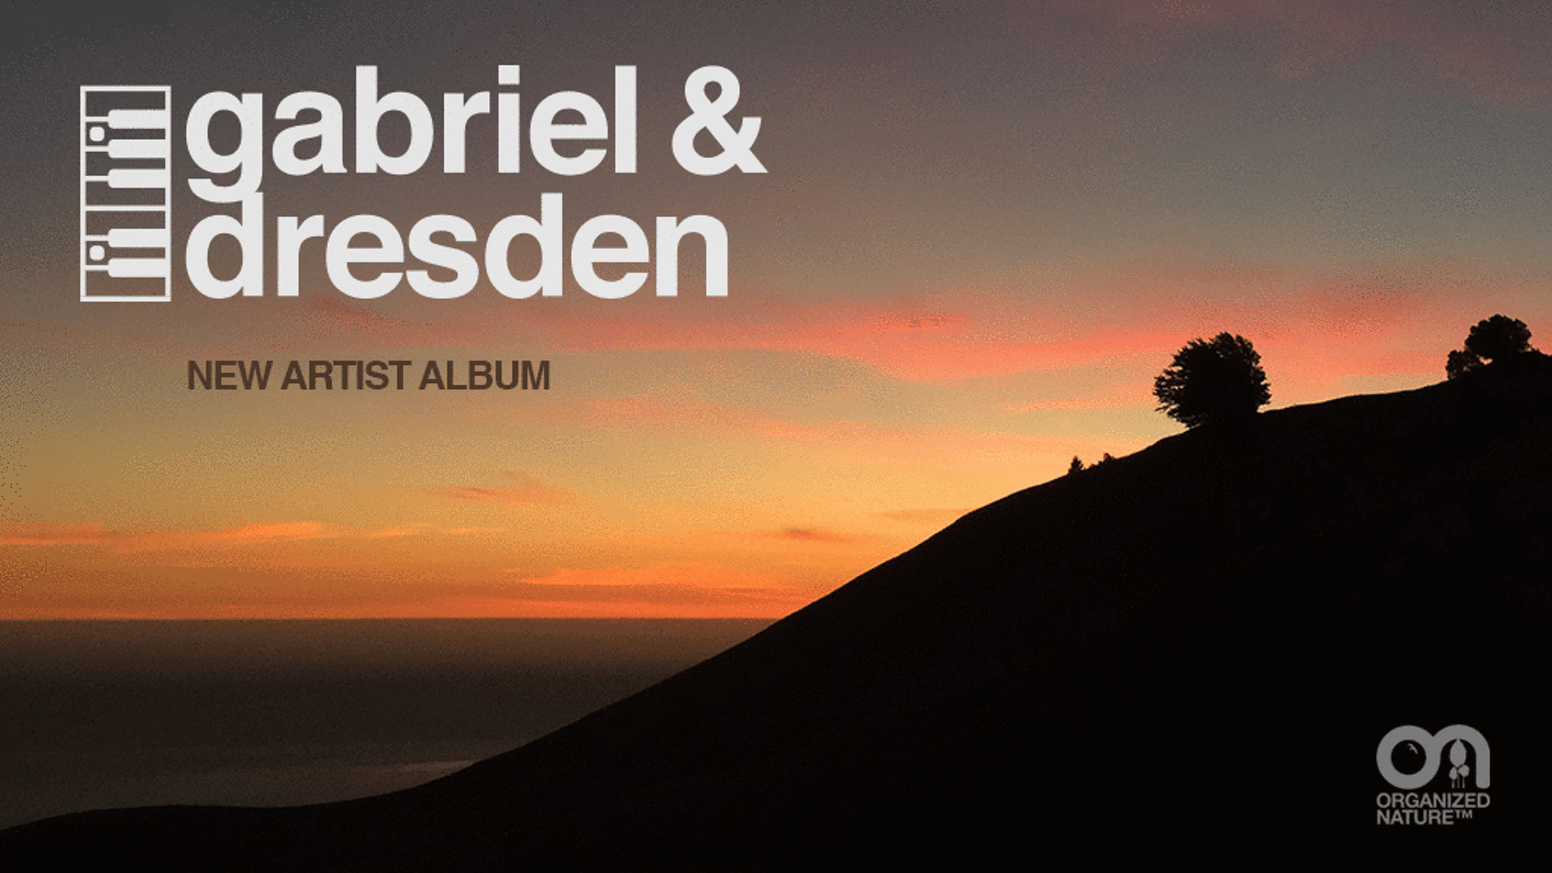 Gabriel & Dresden New Album